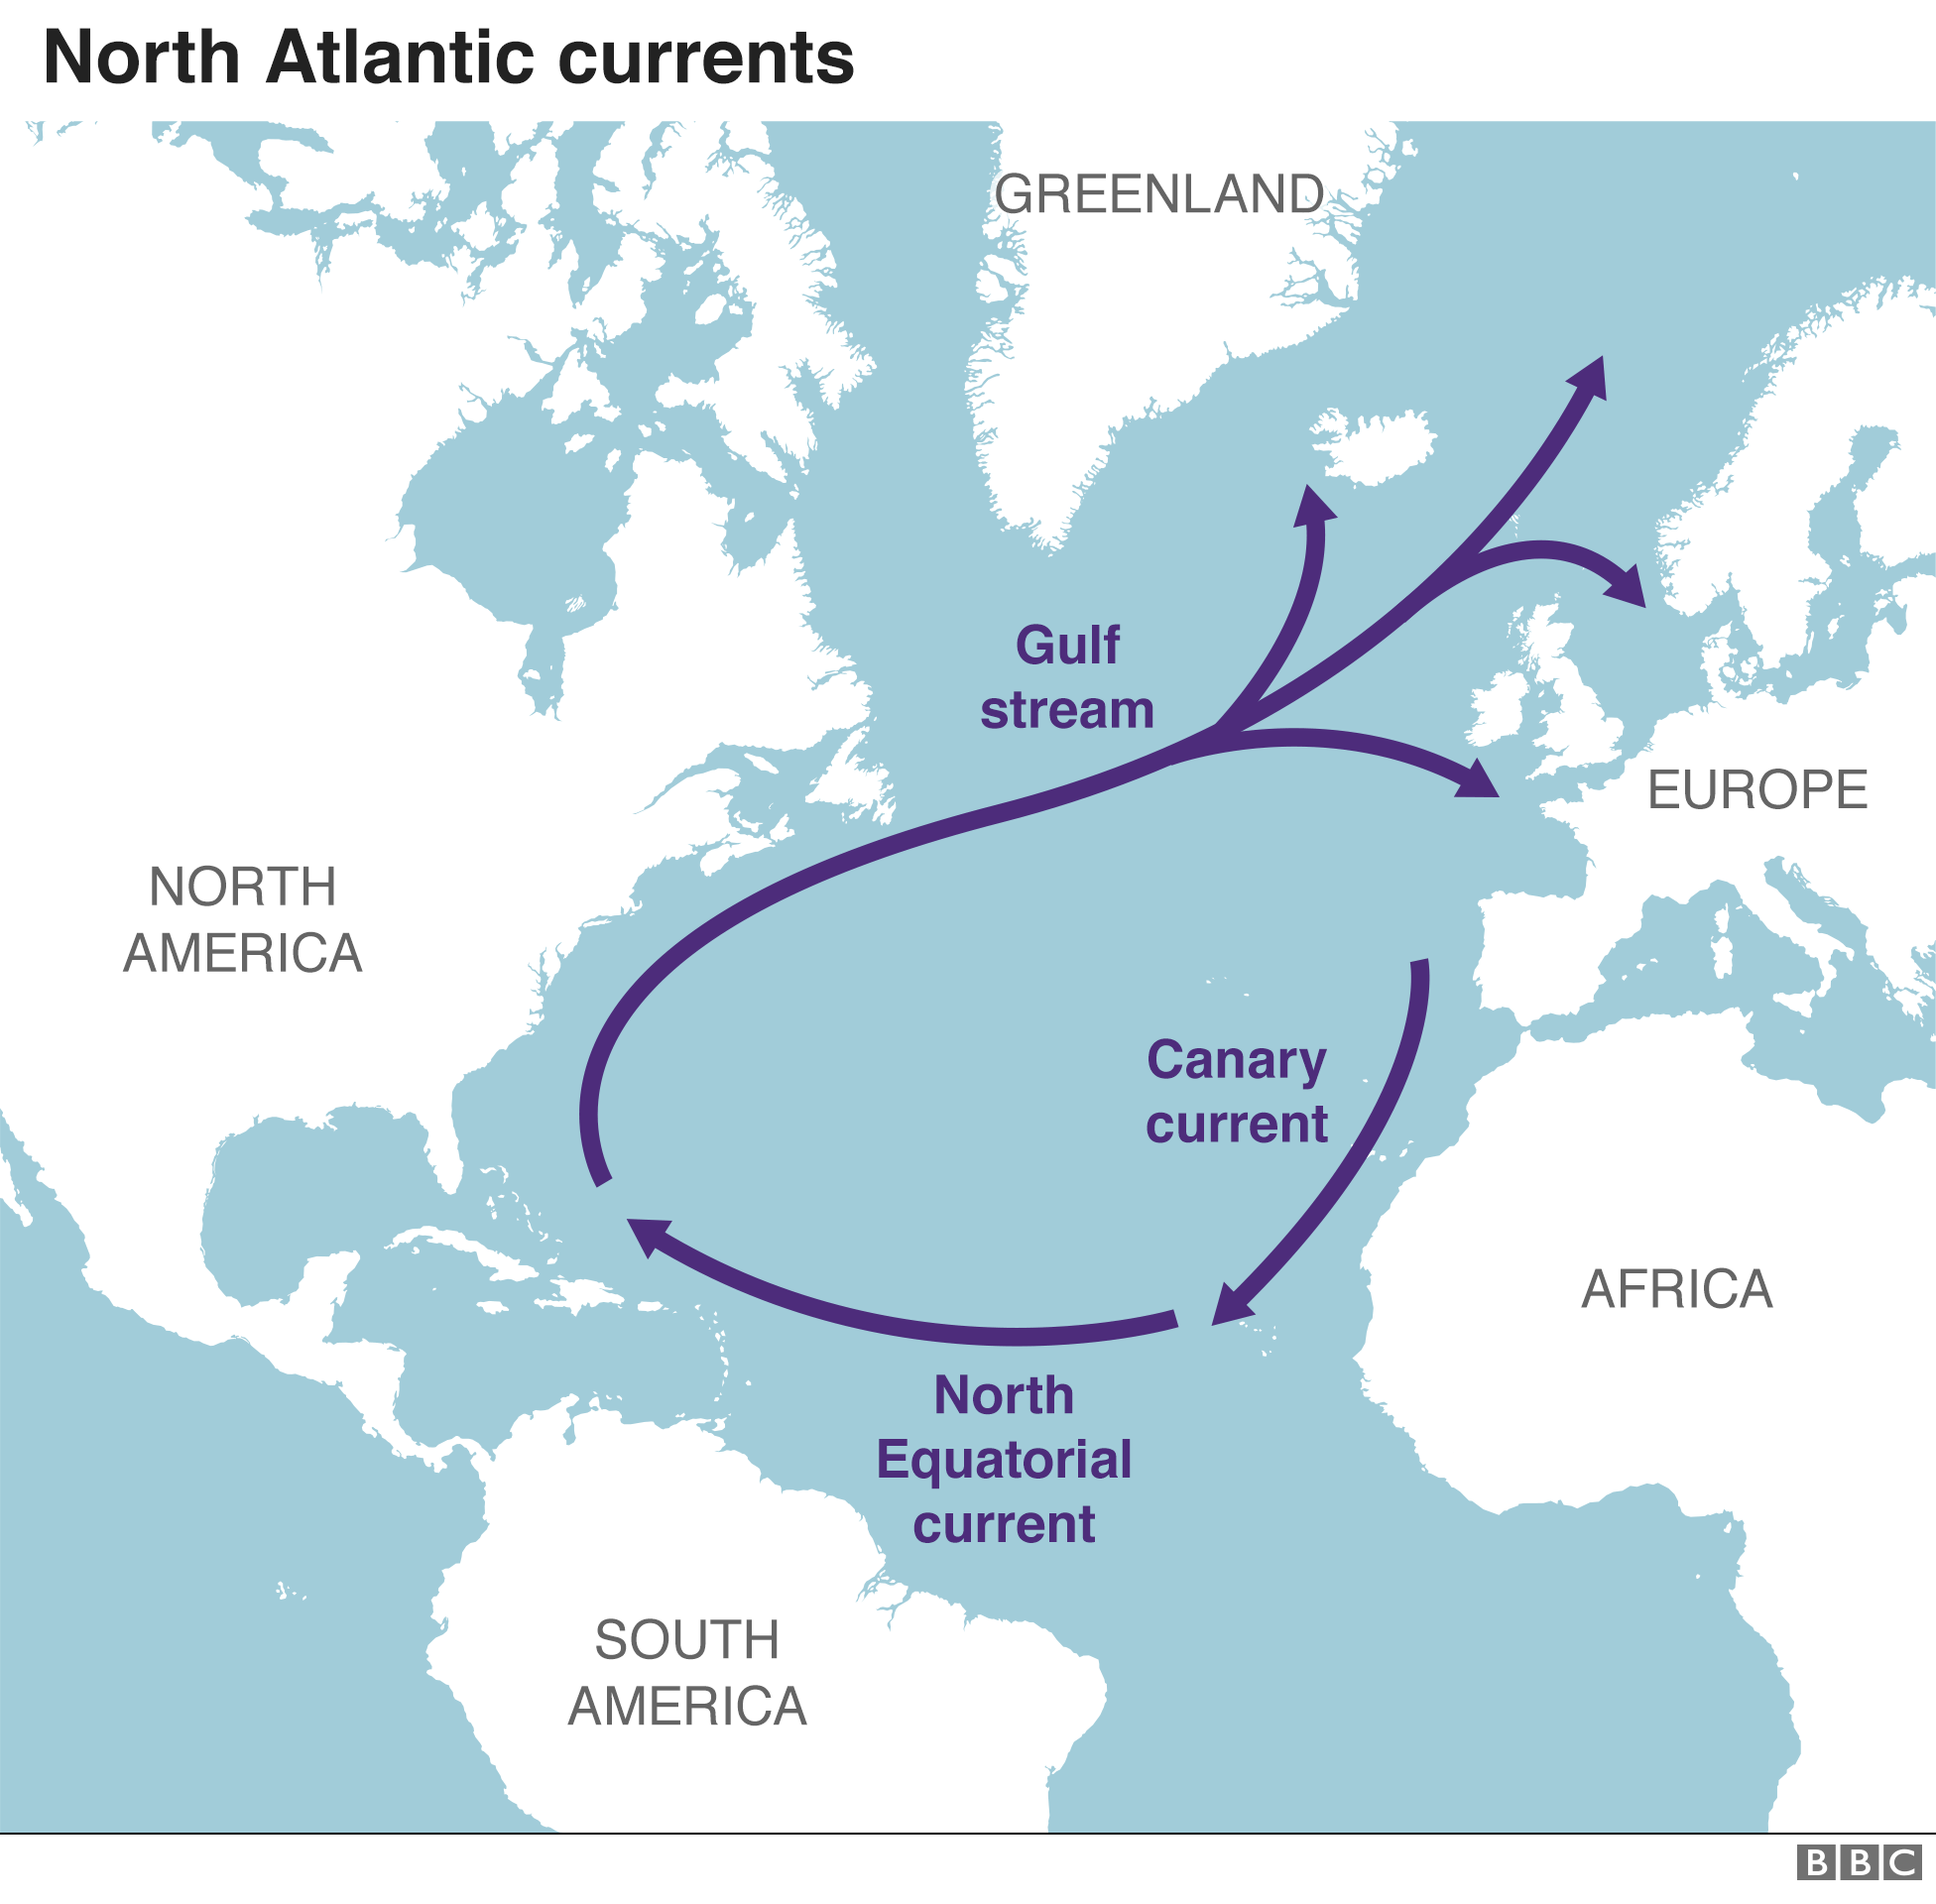 Северо атлантическое течение. Канарское течение на карте. Северо атлантическое течение на карте мирового океана. Северо-атлантическое течение на карте. Канарское течение на карте Африки.